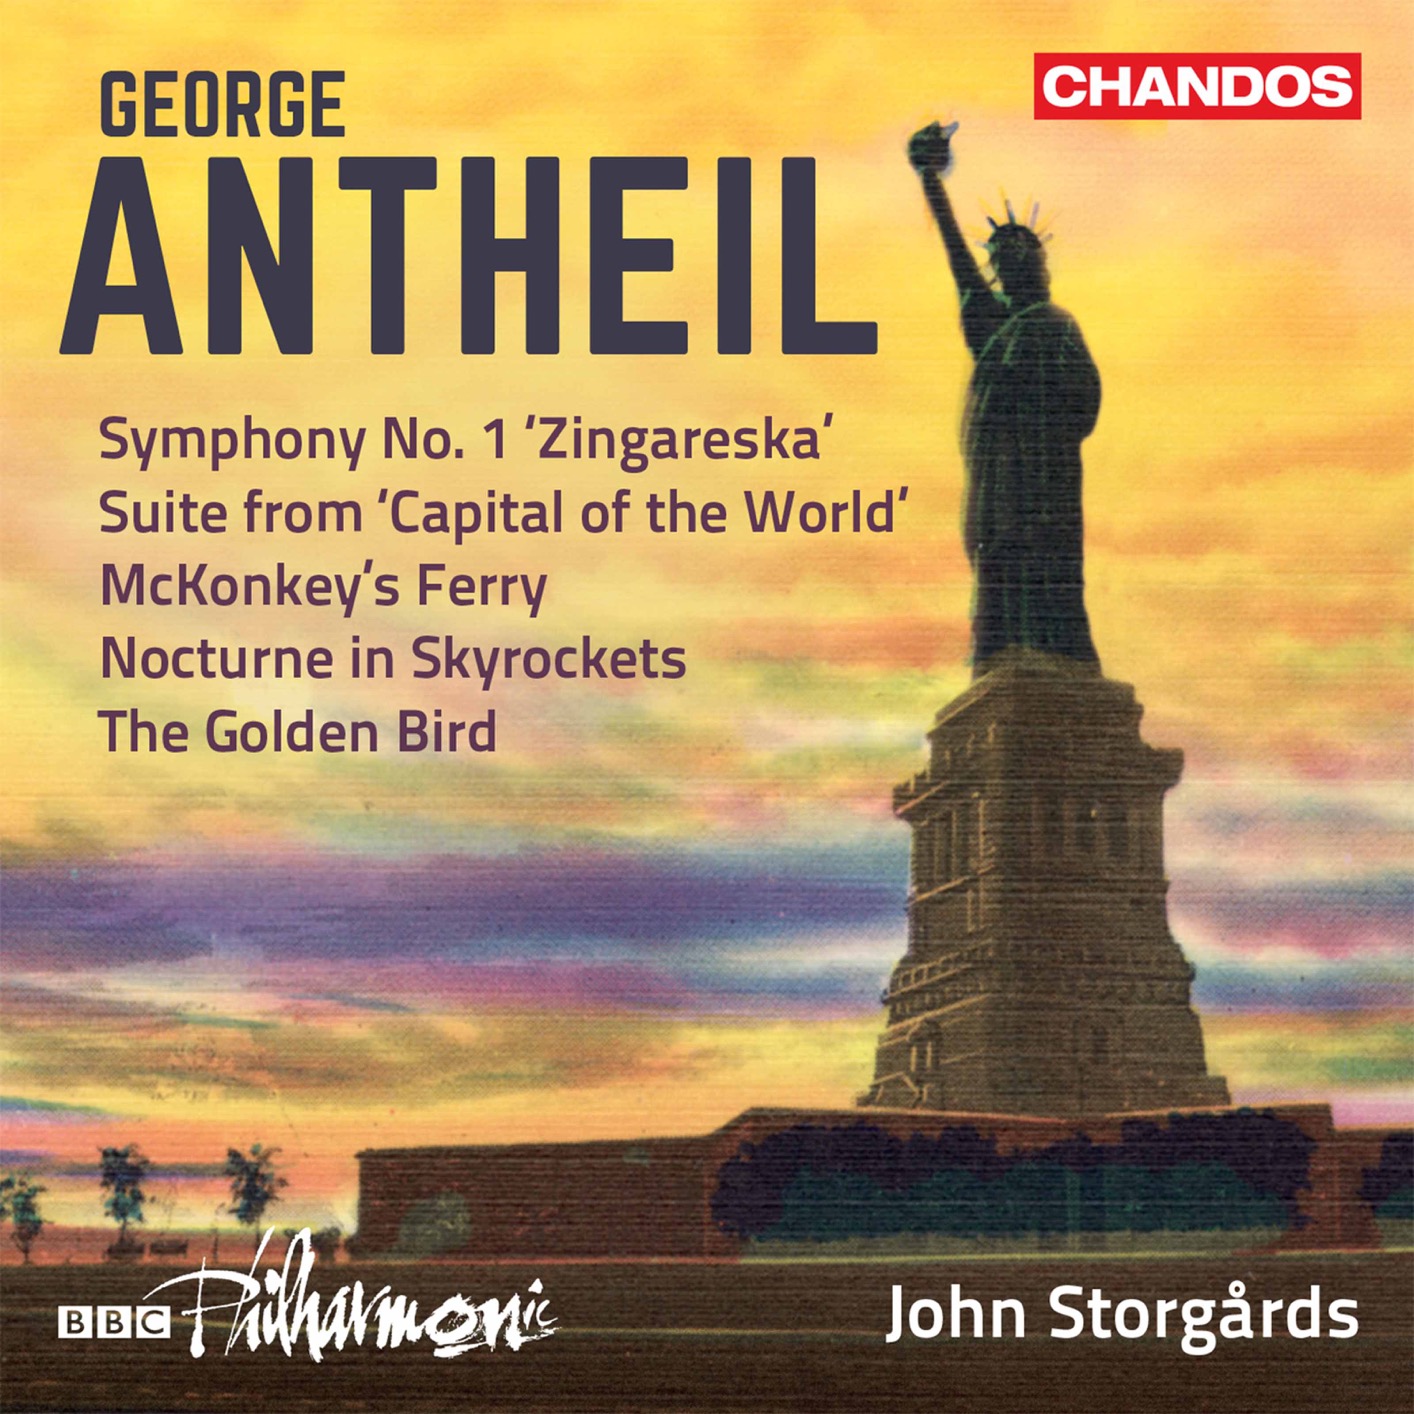 BBC Philharmonic Orchestra & John Storgards - Antheil: Orchestral Works, Vol. 3 (2019) [FLAC 24bit/96kHz]